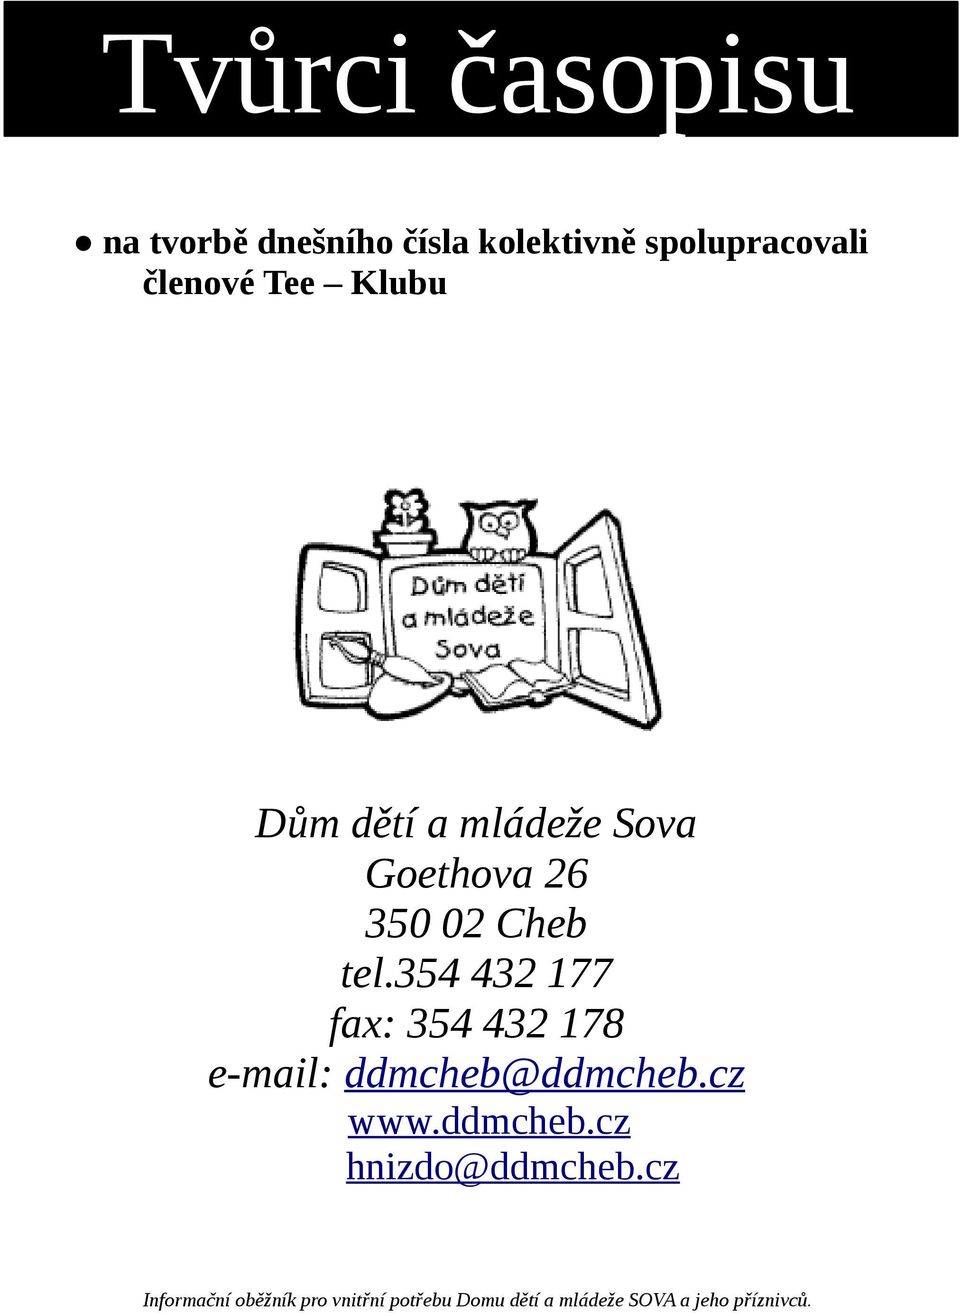 354 432 177 fax: 354 432 178 e-mail: ddmcheb@ddmcheb.cz www.ddmcheb.cz hnizdo@ddmcheb.